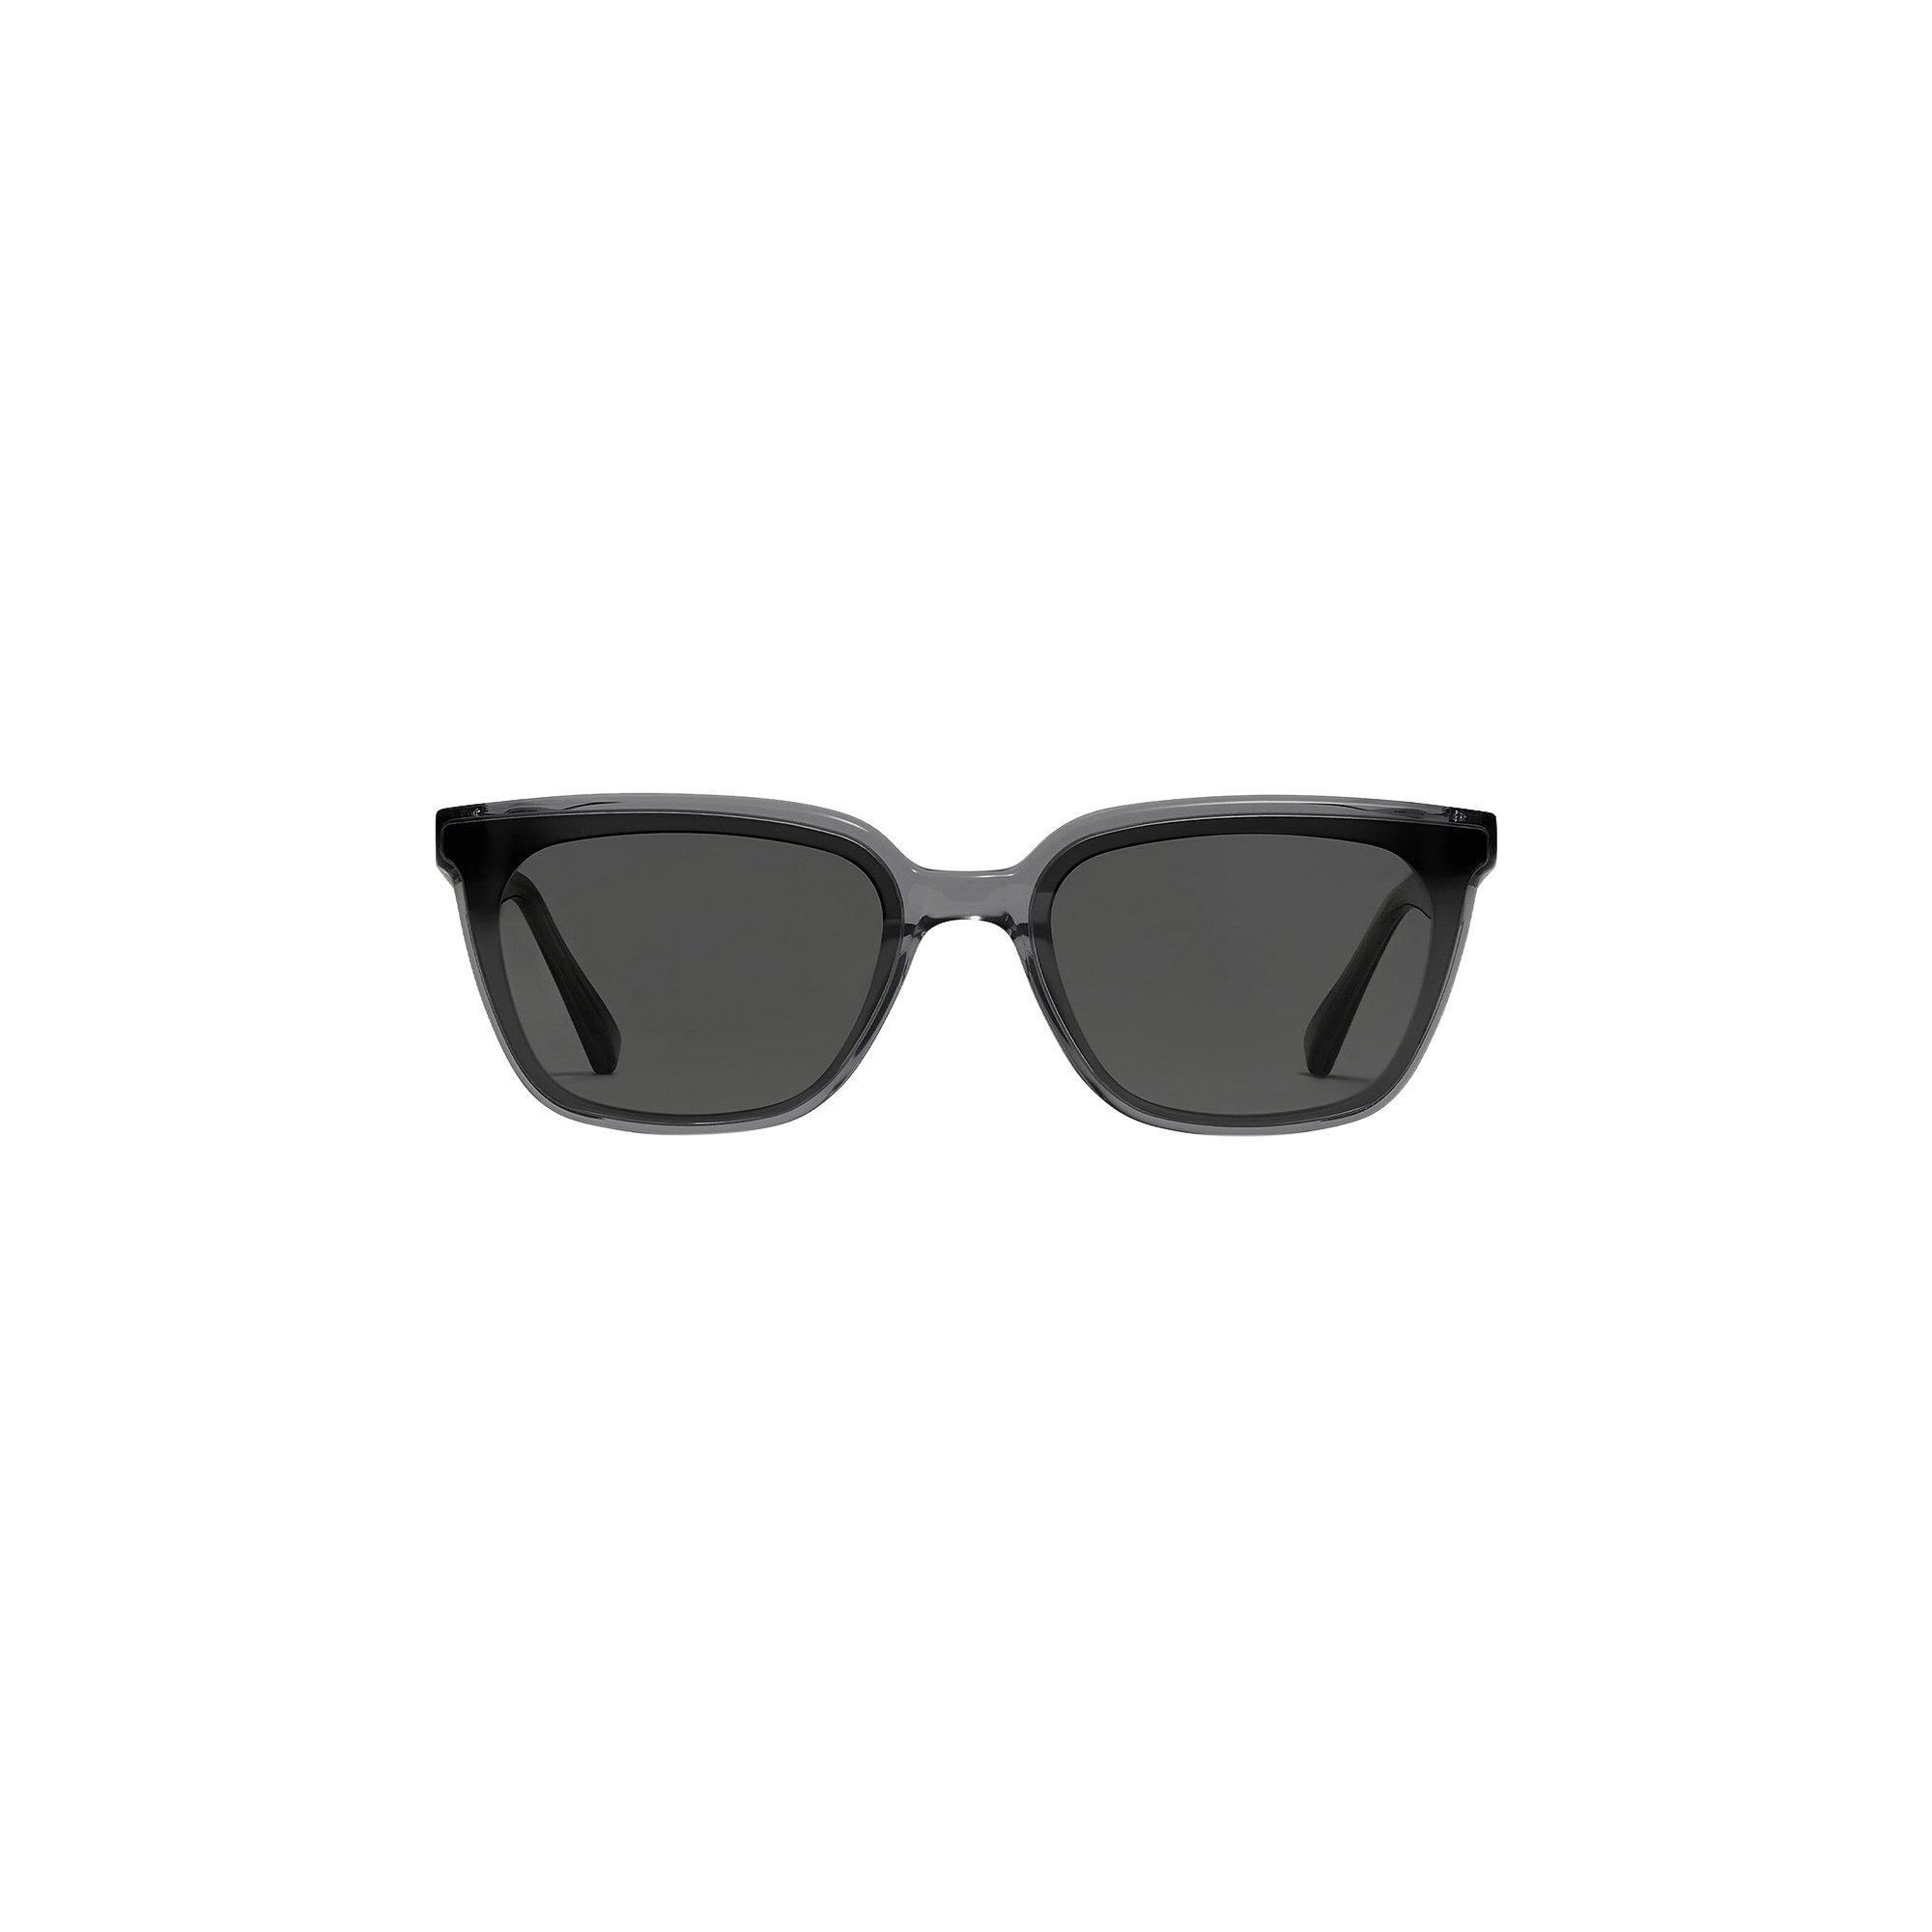 Buy Gentle Monster Mondo G1 Sunglasses 'Black' - MONDO G1 BLAC